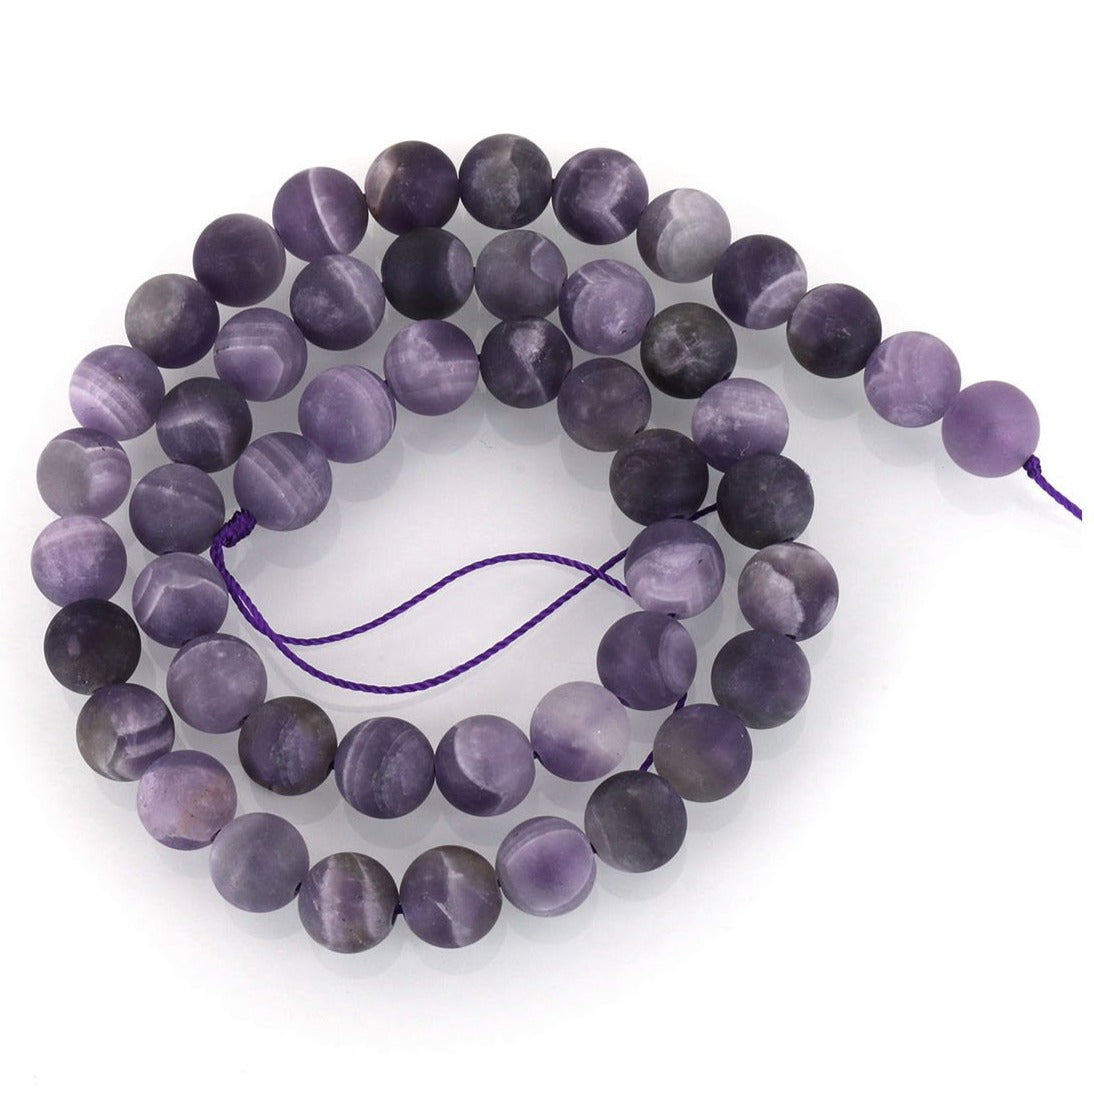  8mm Natural Gemstone Amethyst Bracelet Round Beads